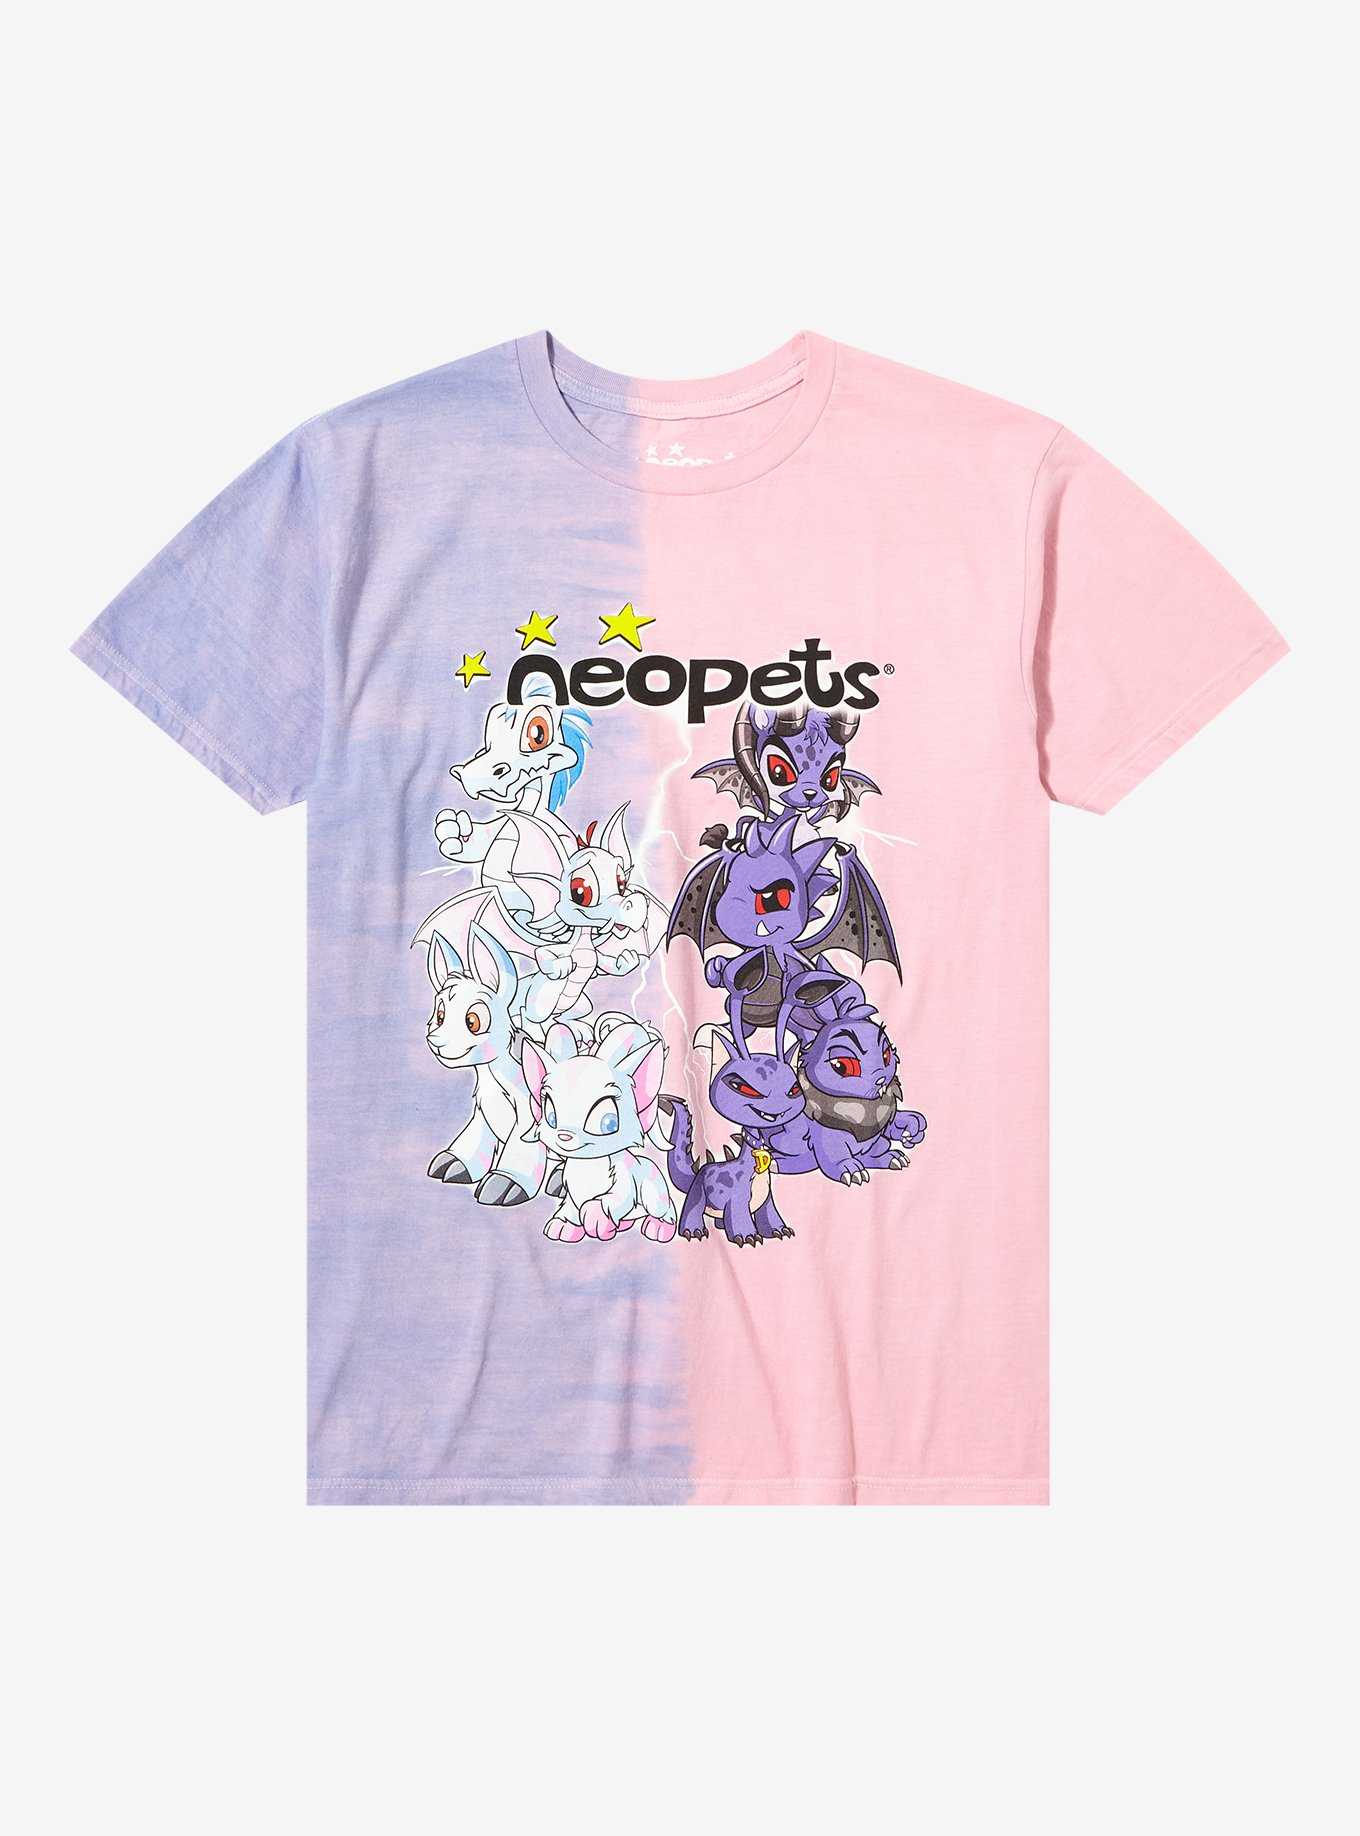 Neopets Group Split Dye Boyfriend Fit Girls T-Shirt, , hi-res